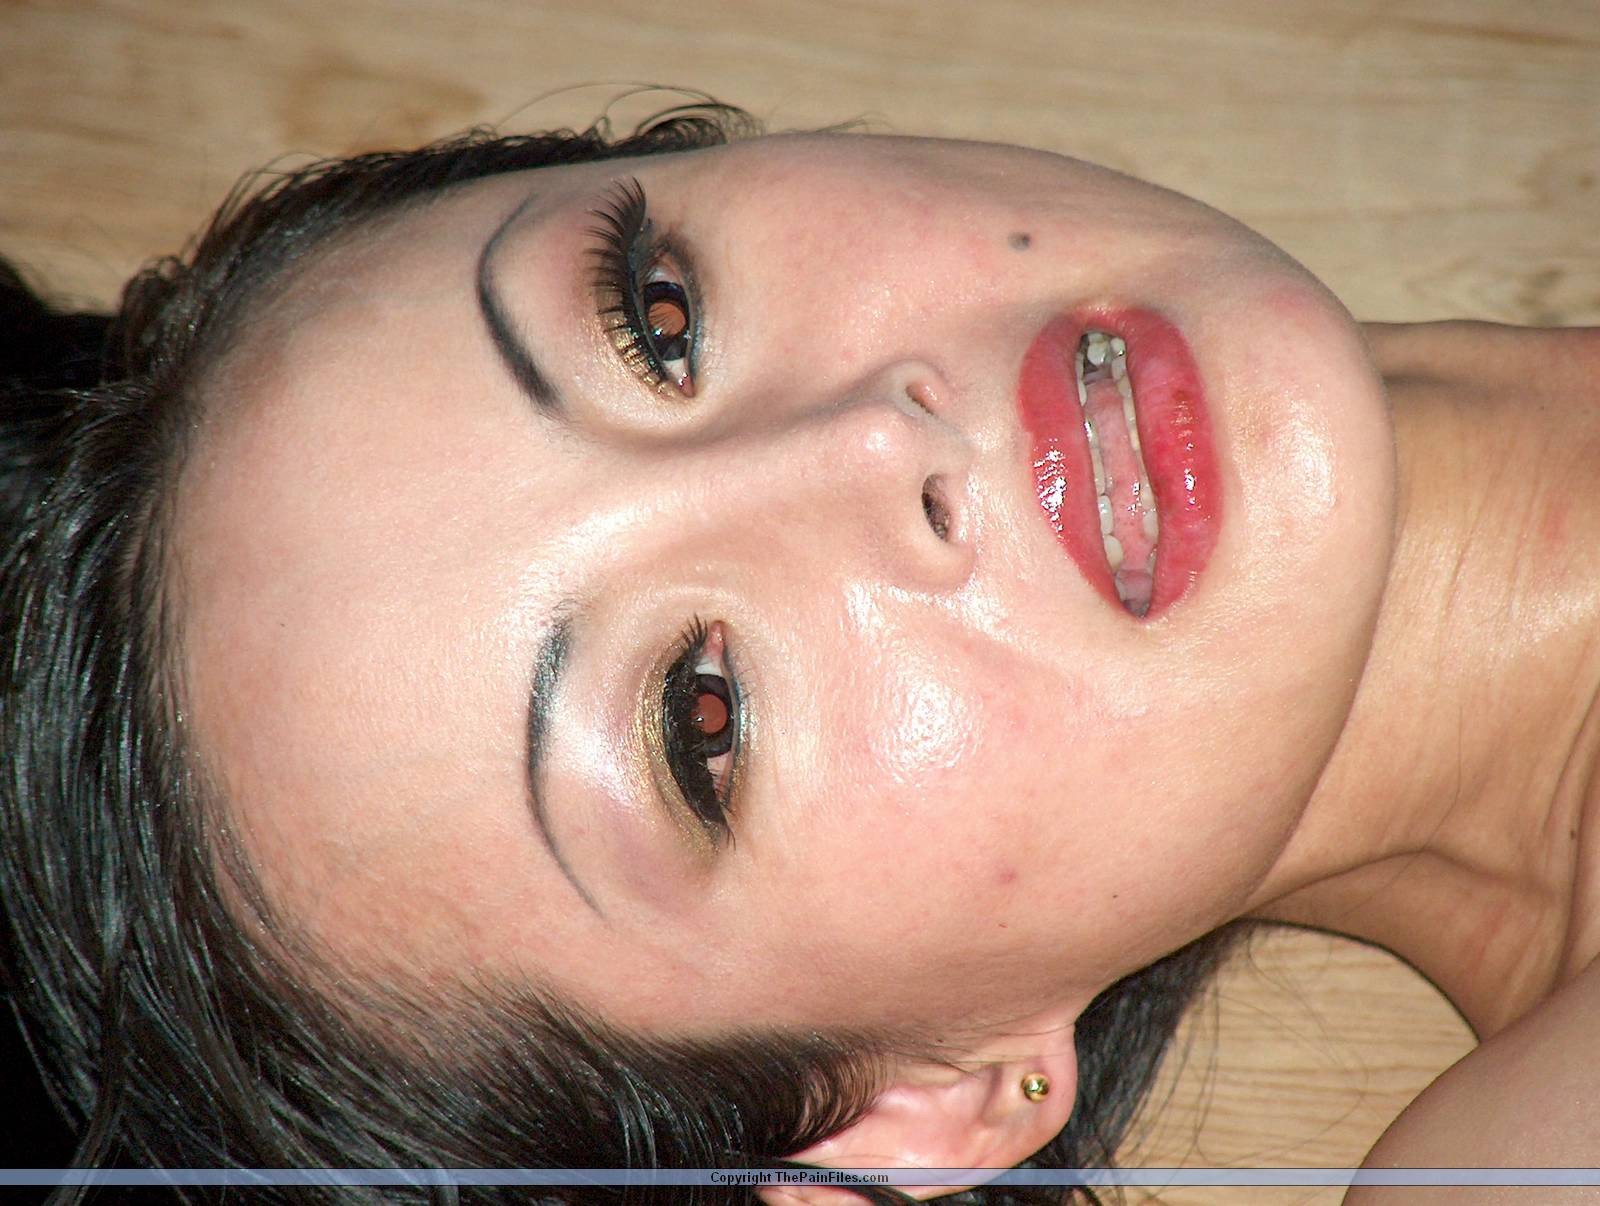 Cinese bdsm slavegirl ange venus in punizione seno busty e dolore hotwaxing
 #69948112